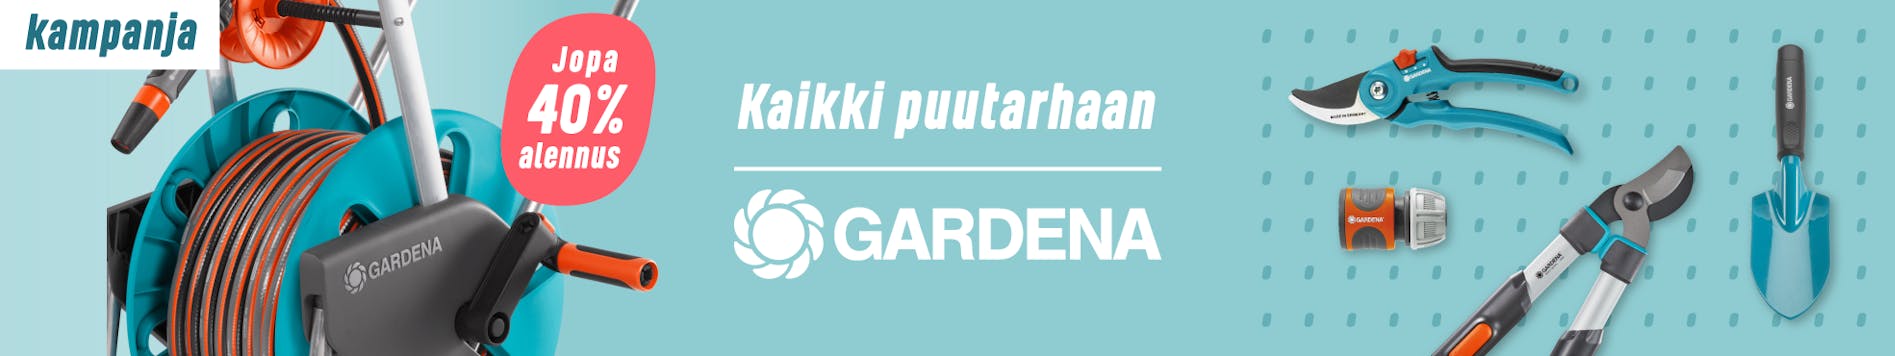 https://www.staypro.fi/gardena-kampanja